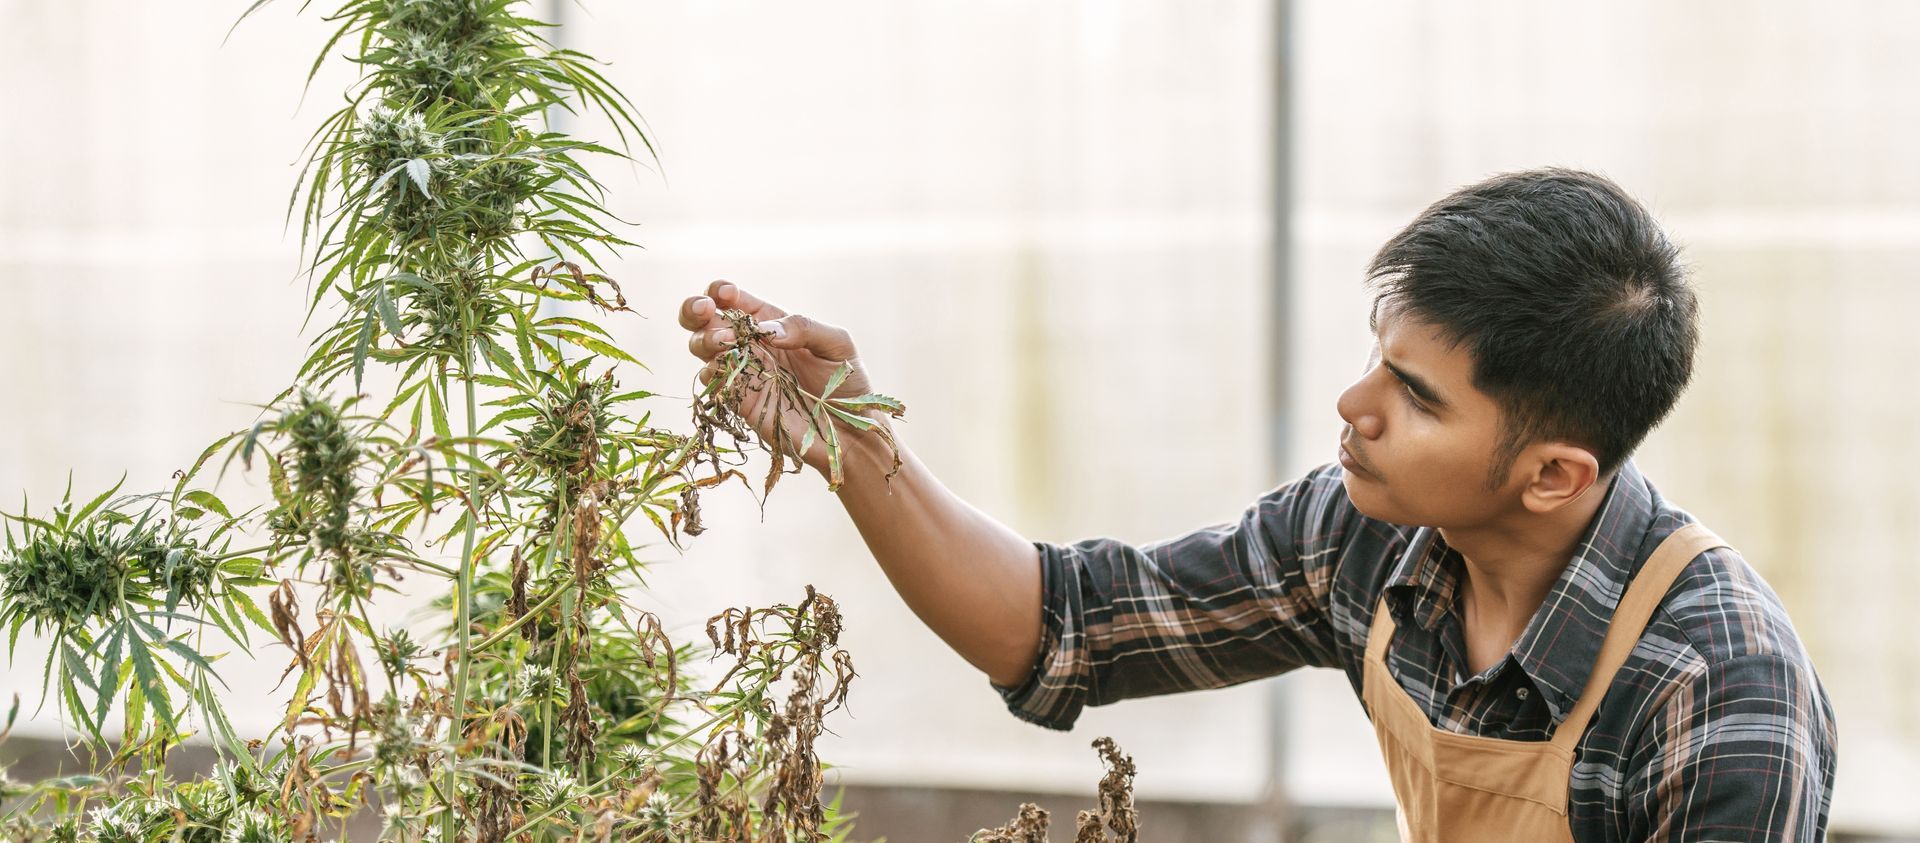 A cannabis farmer checks his dying cannabis plant, he considers The Effects of Sugar in Cannabis Cultivation